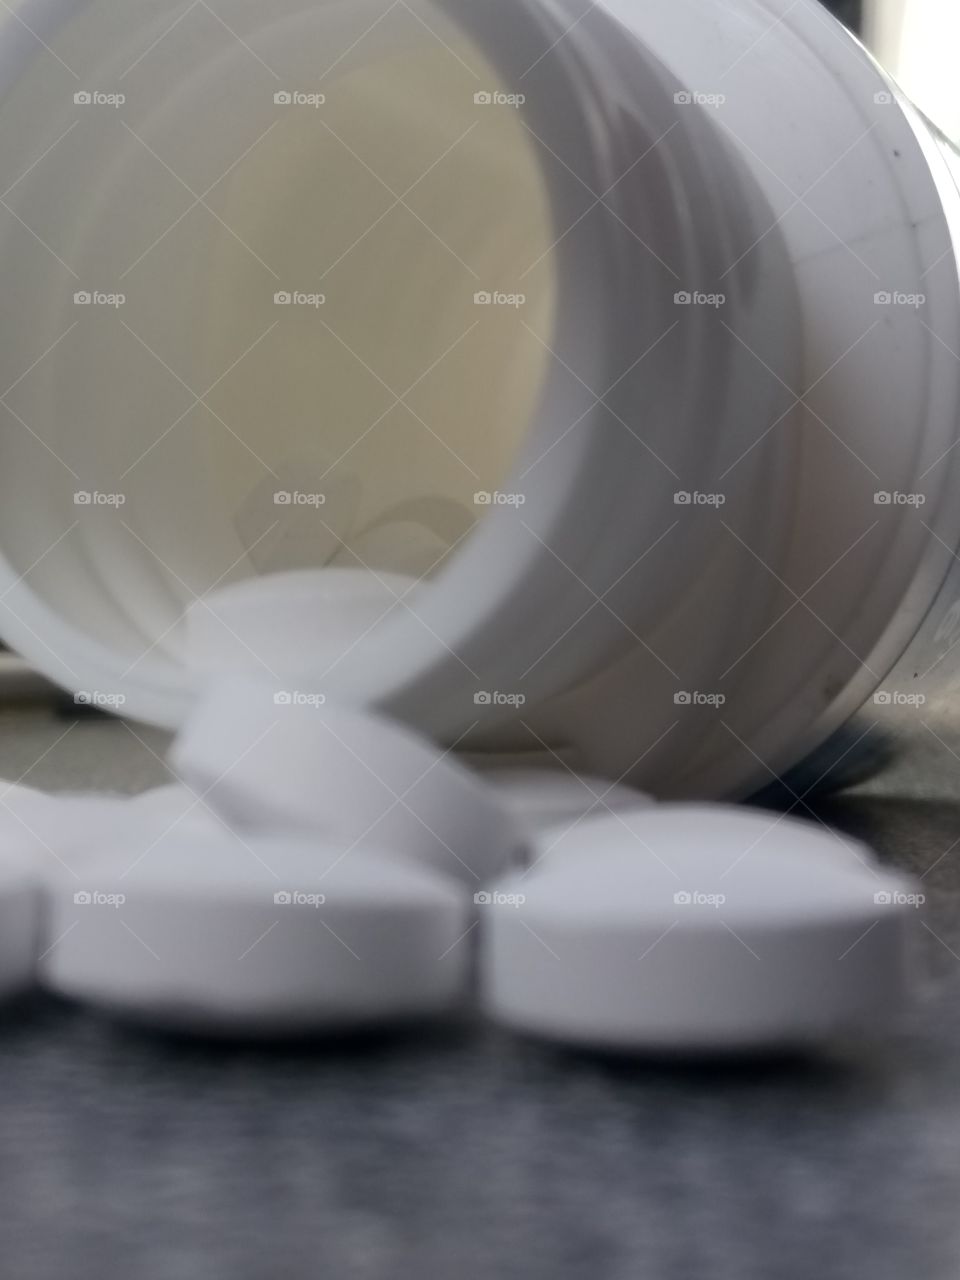 Close up pills, tablets, medicine